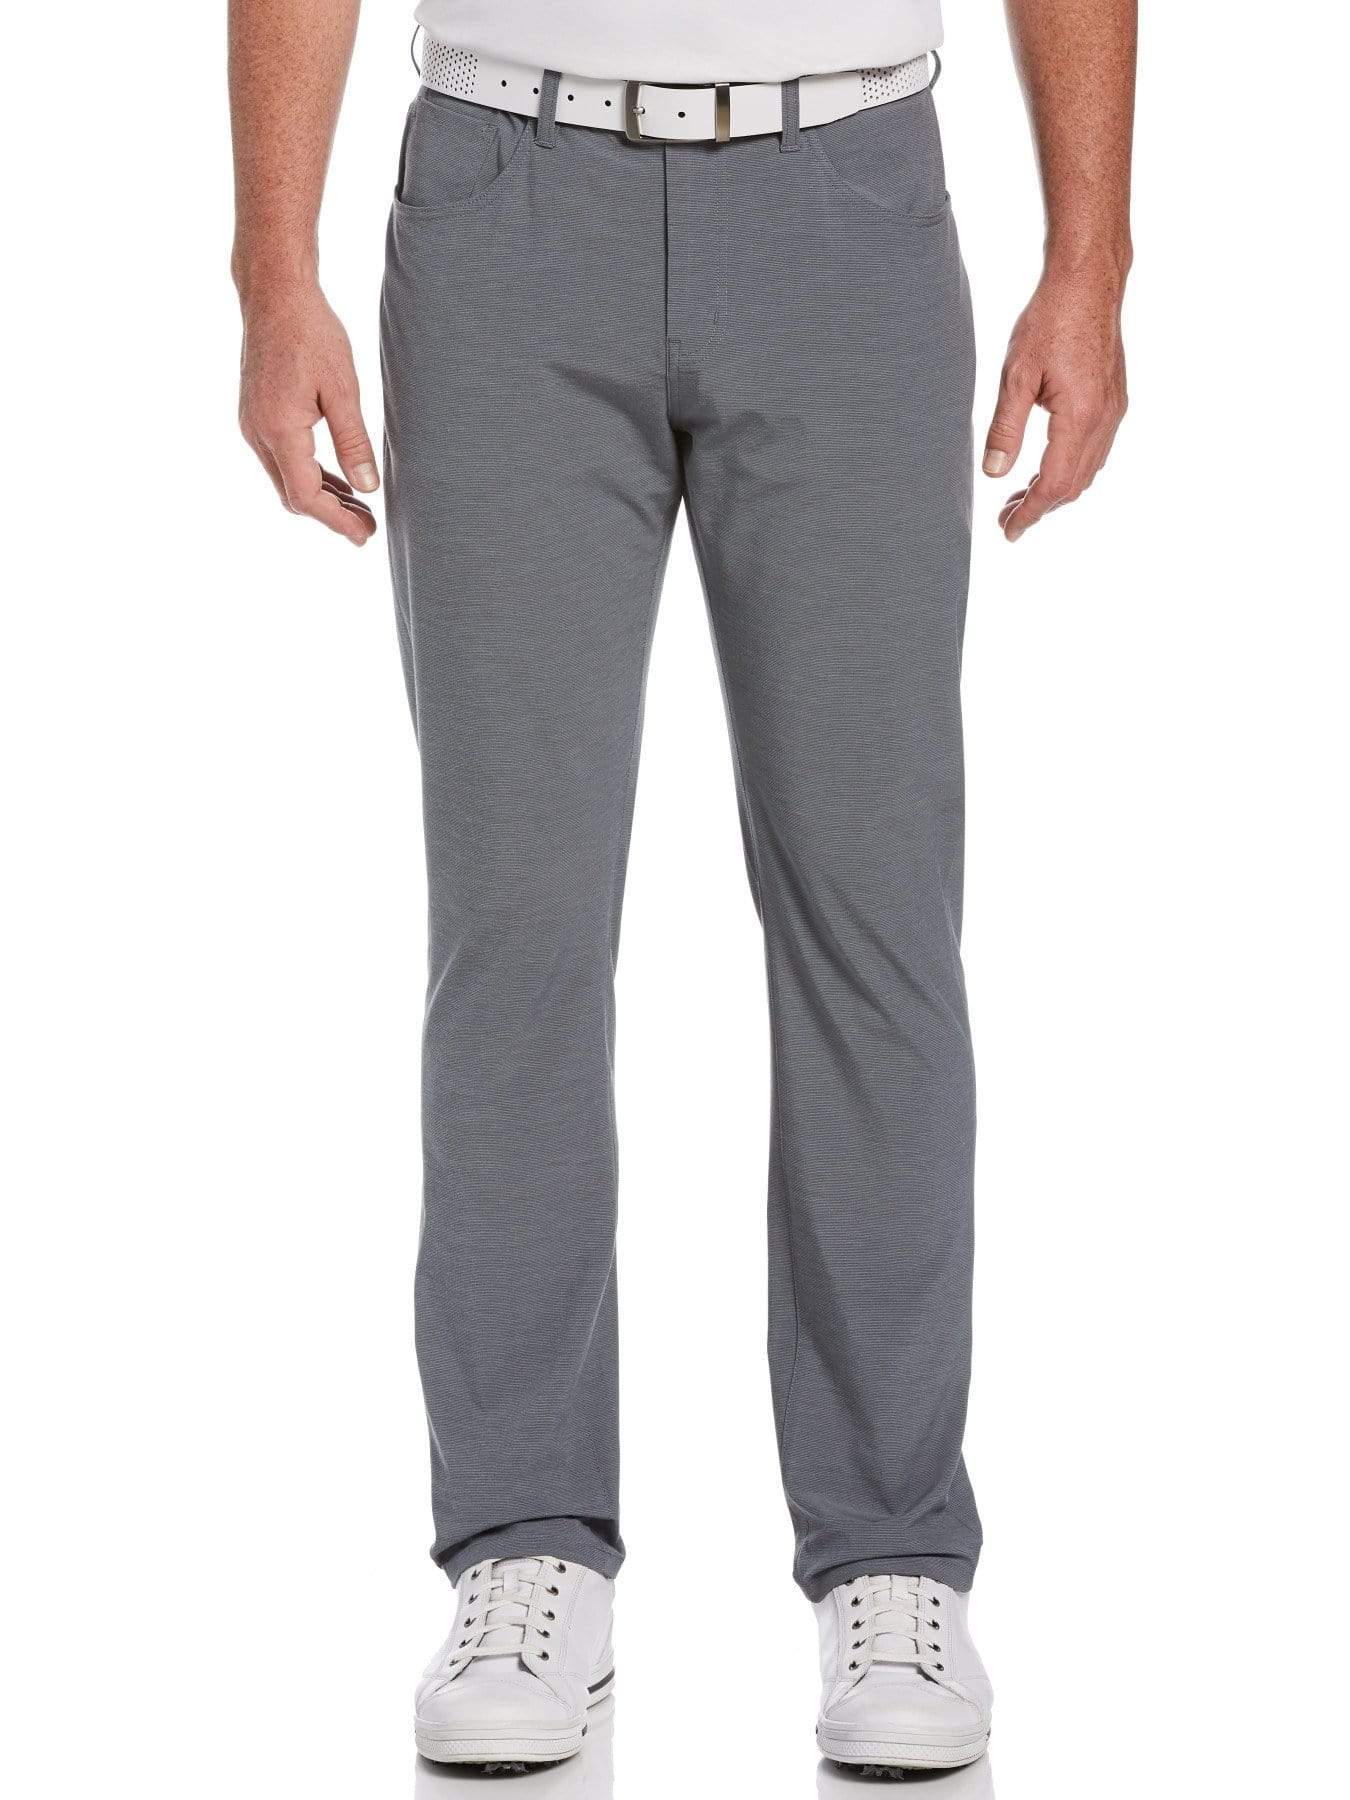 LIVI Active Gray Casual Pants Size 22 - 24 (Plus) - 57% off